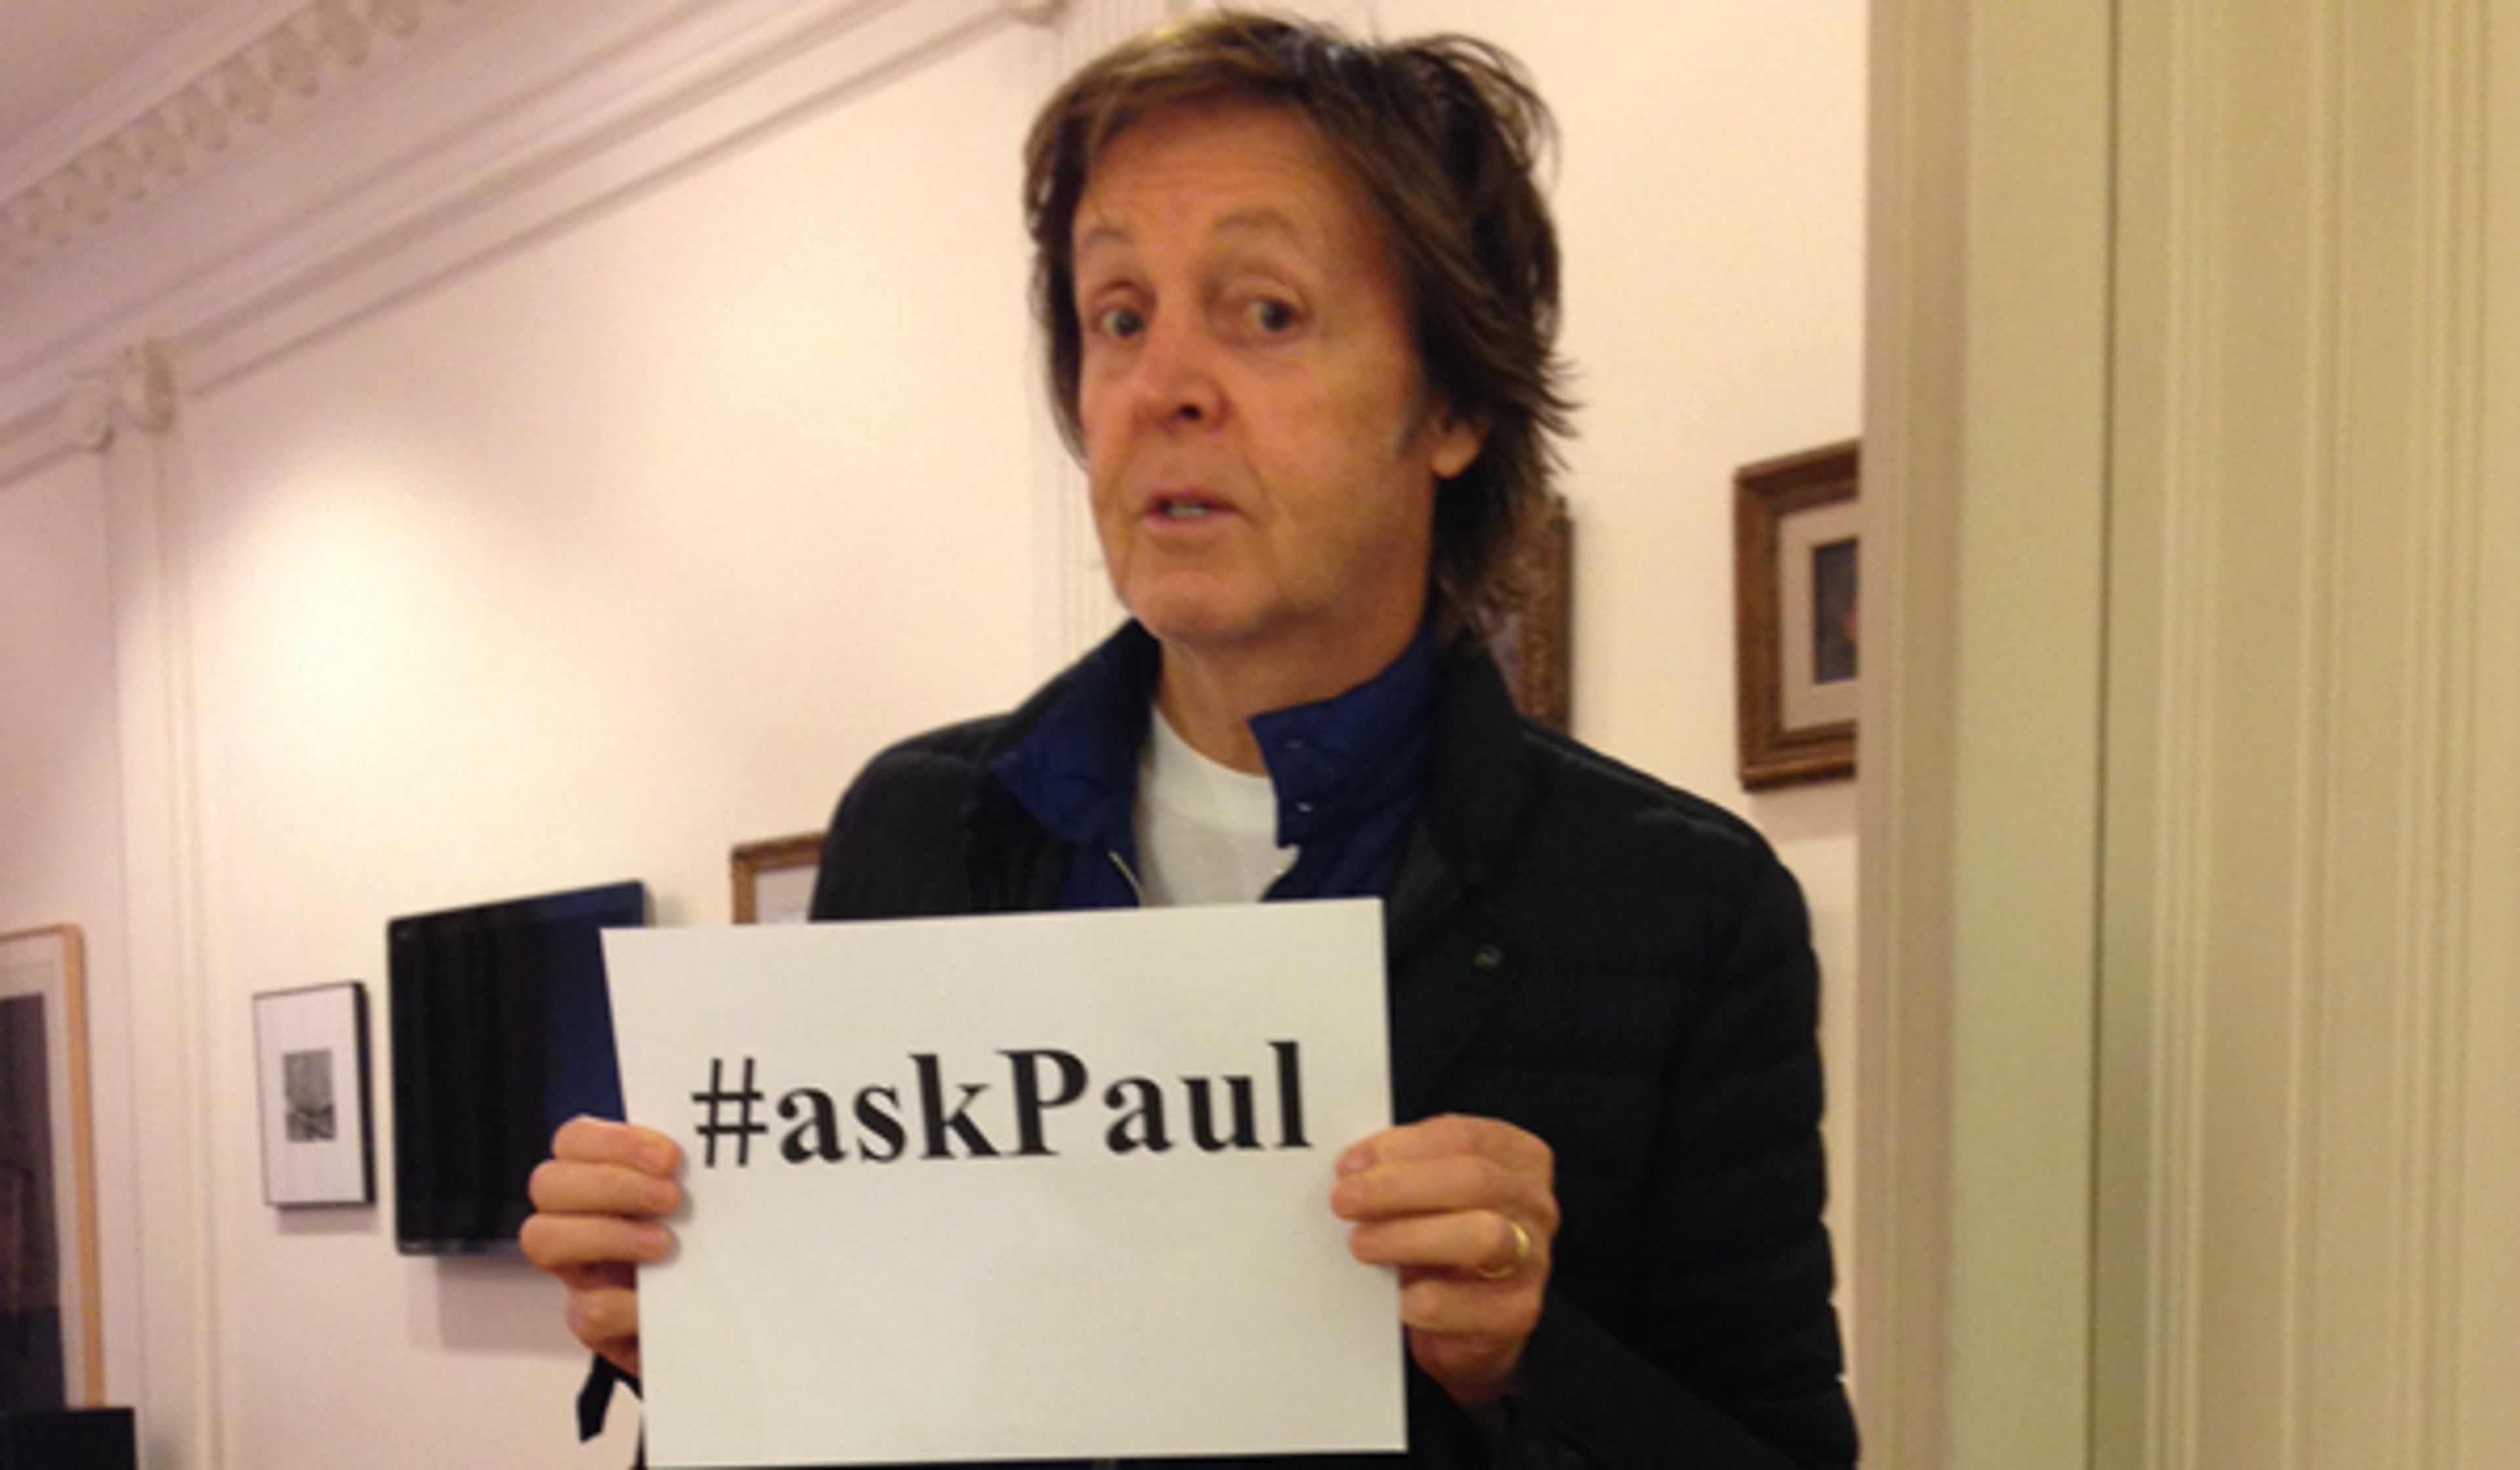 #askPaul - Twitter Q&A Transcript